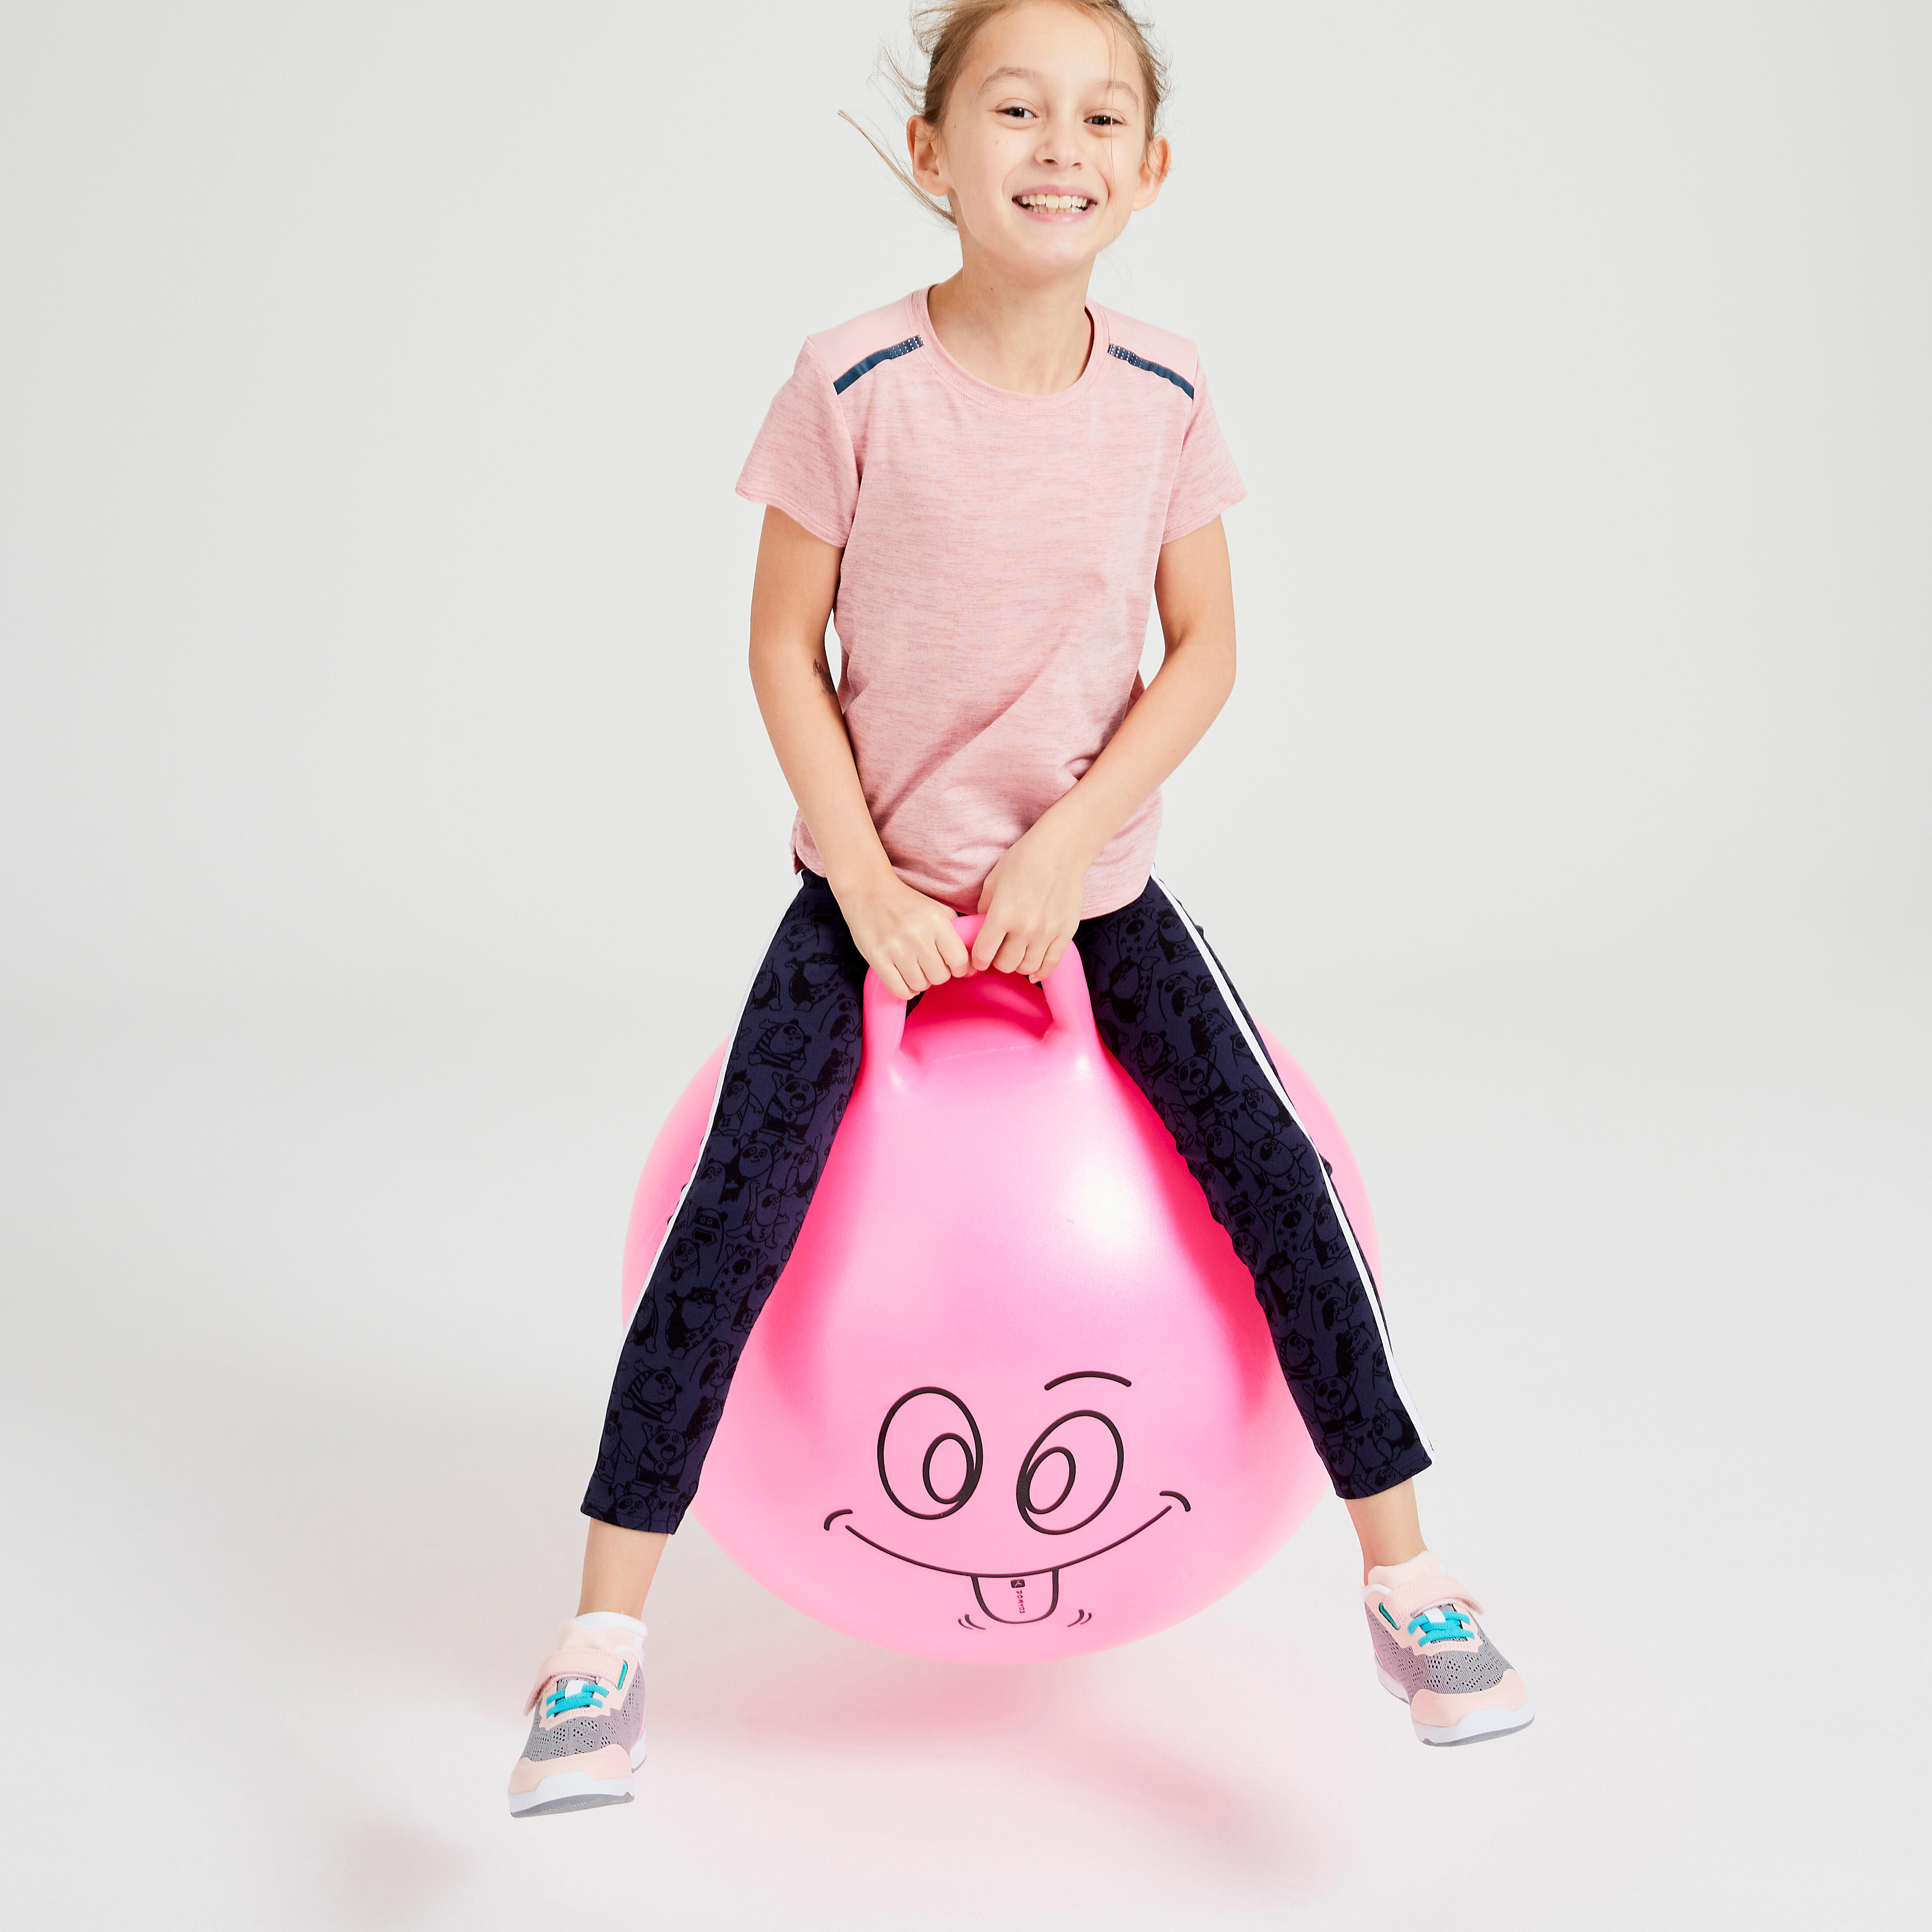 Kids’ Fitness Hopper Ball 60 cm - Pink - DOMYOS